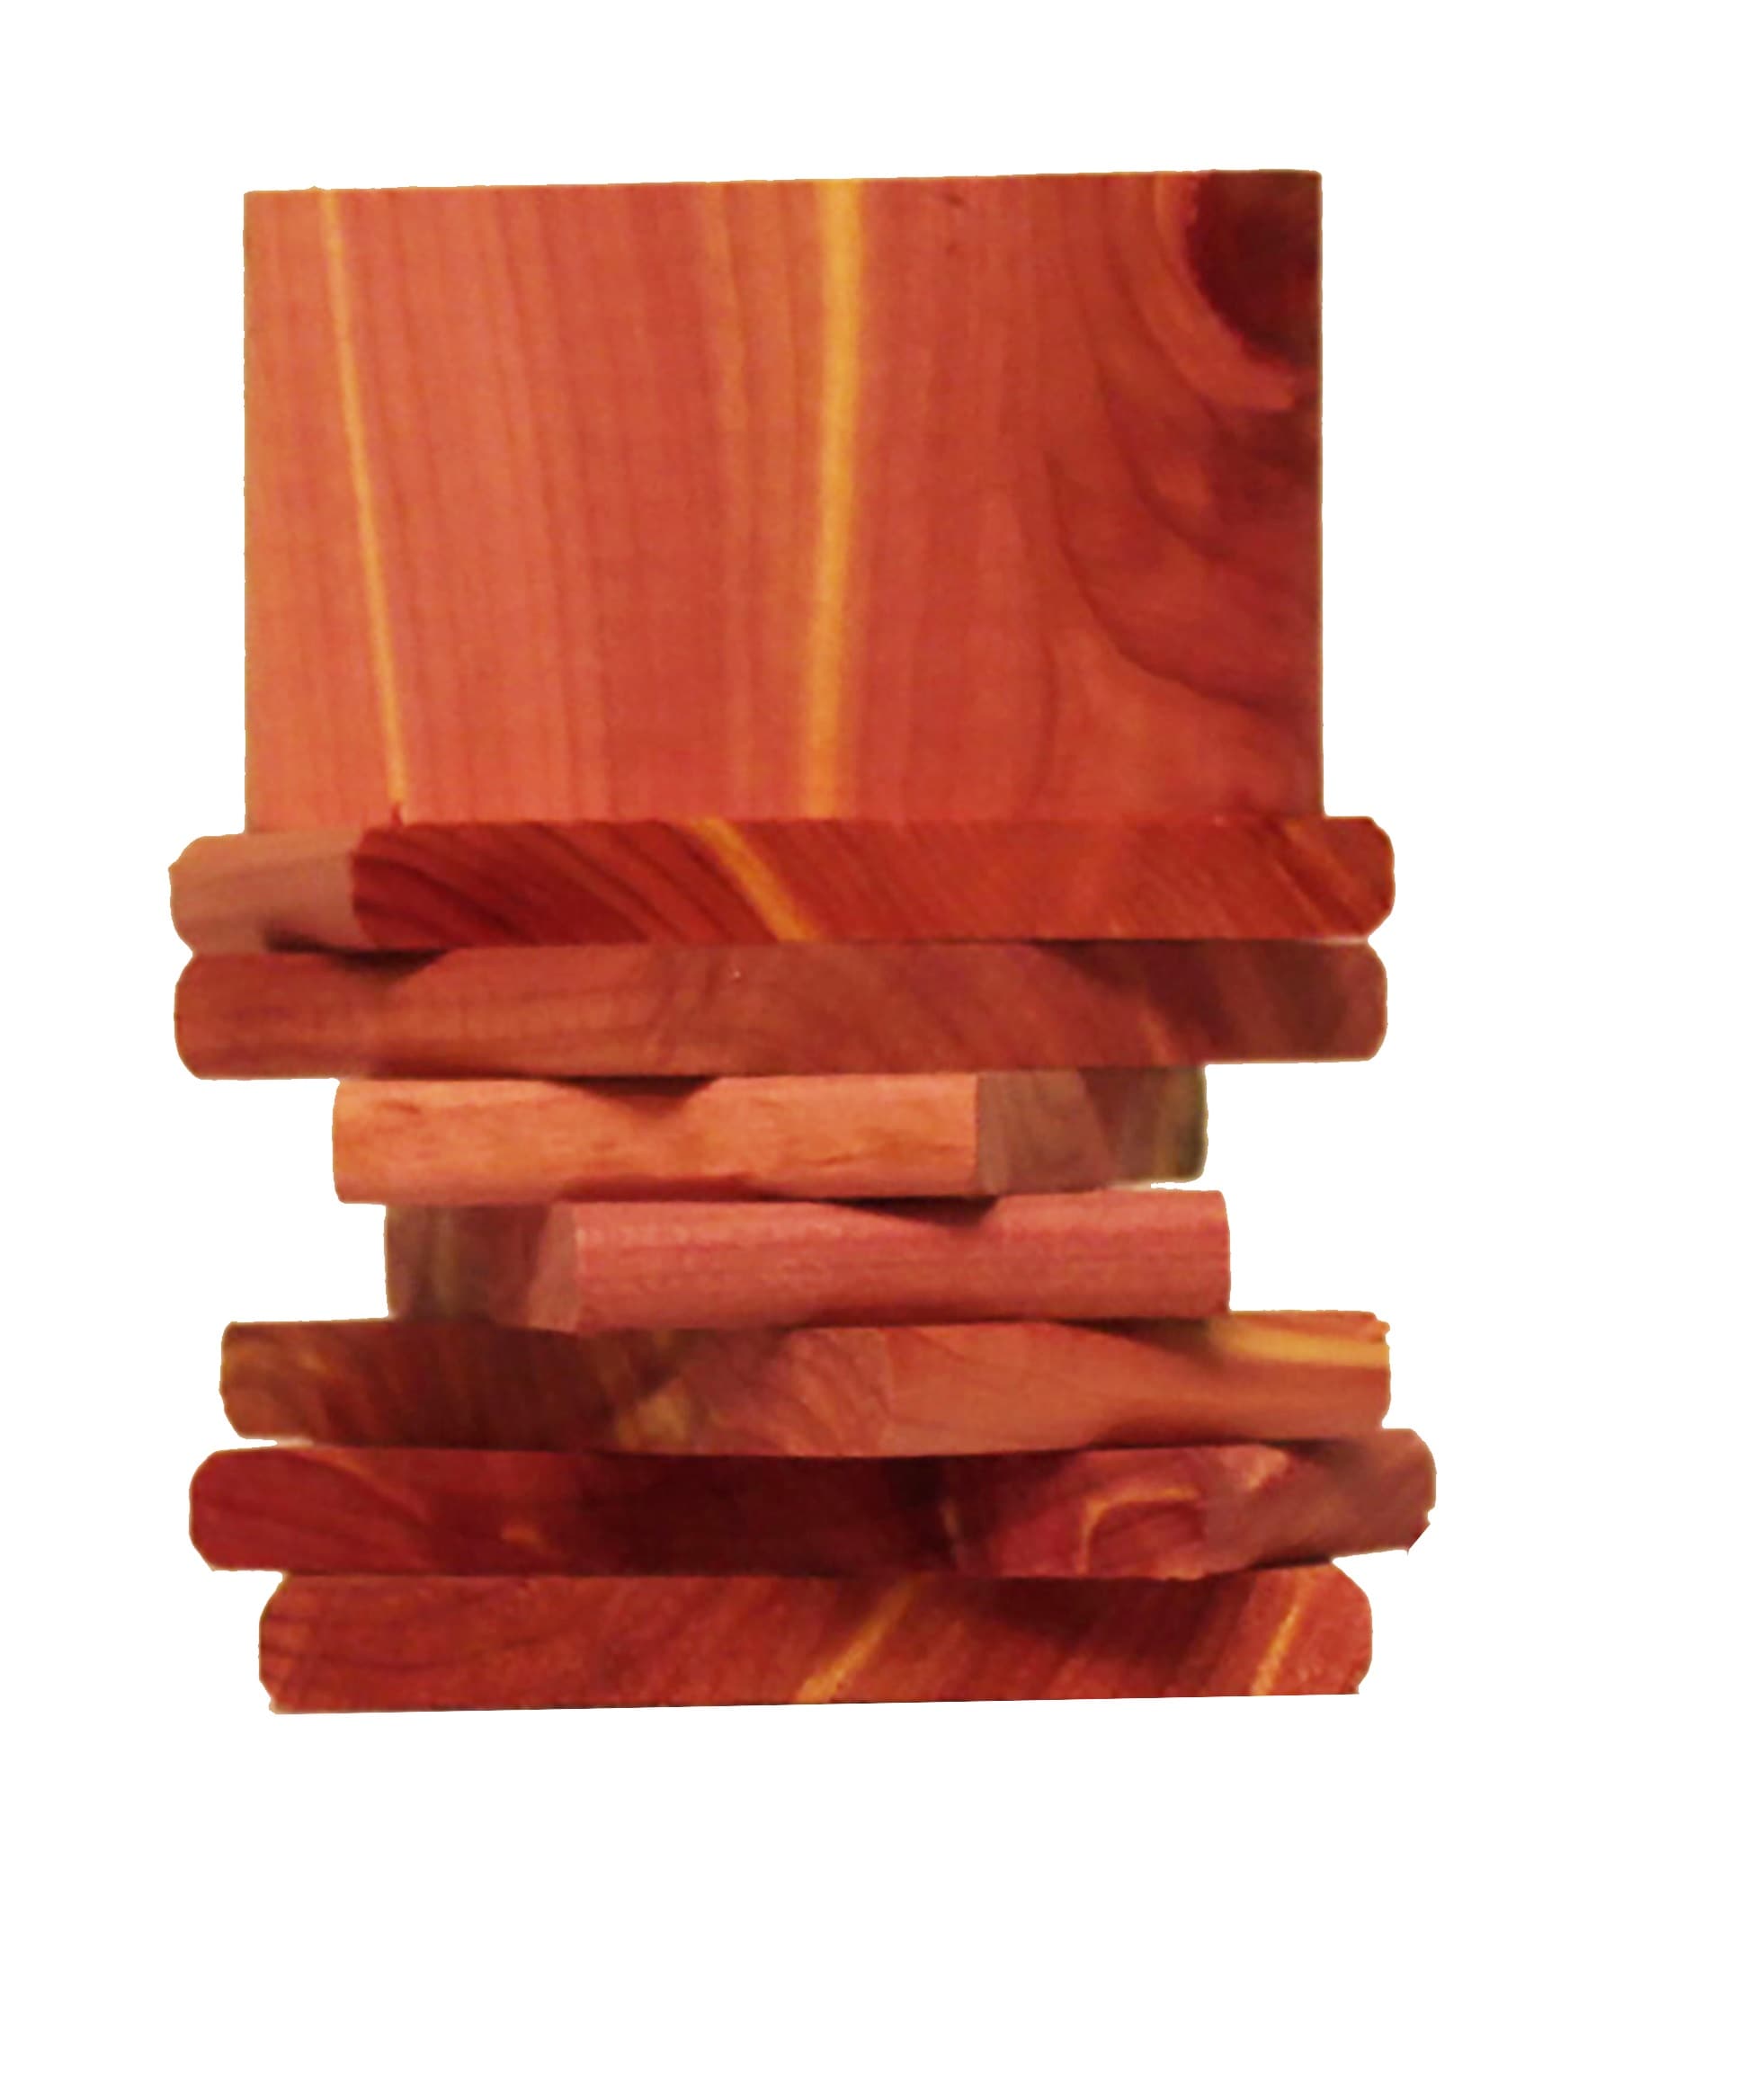 red cedar blocks – Nest